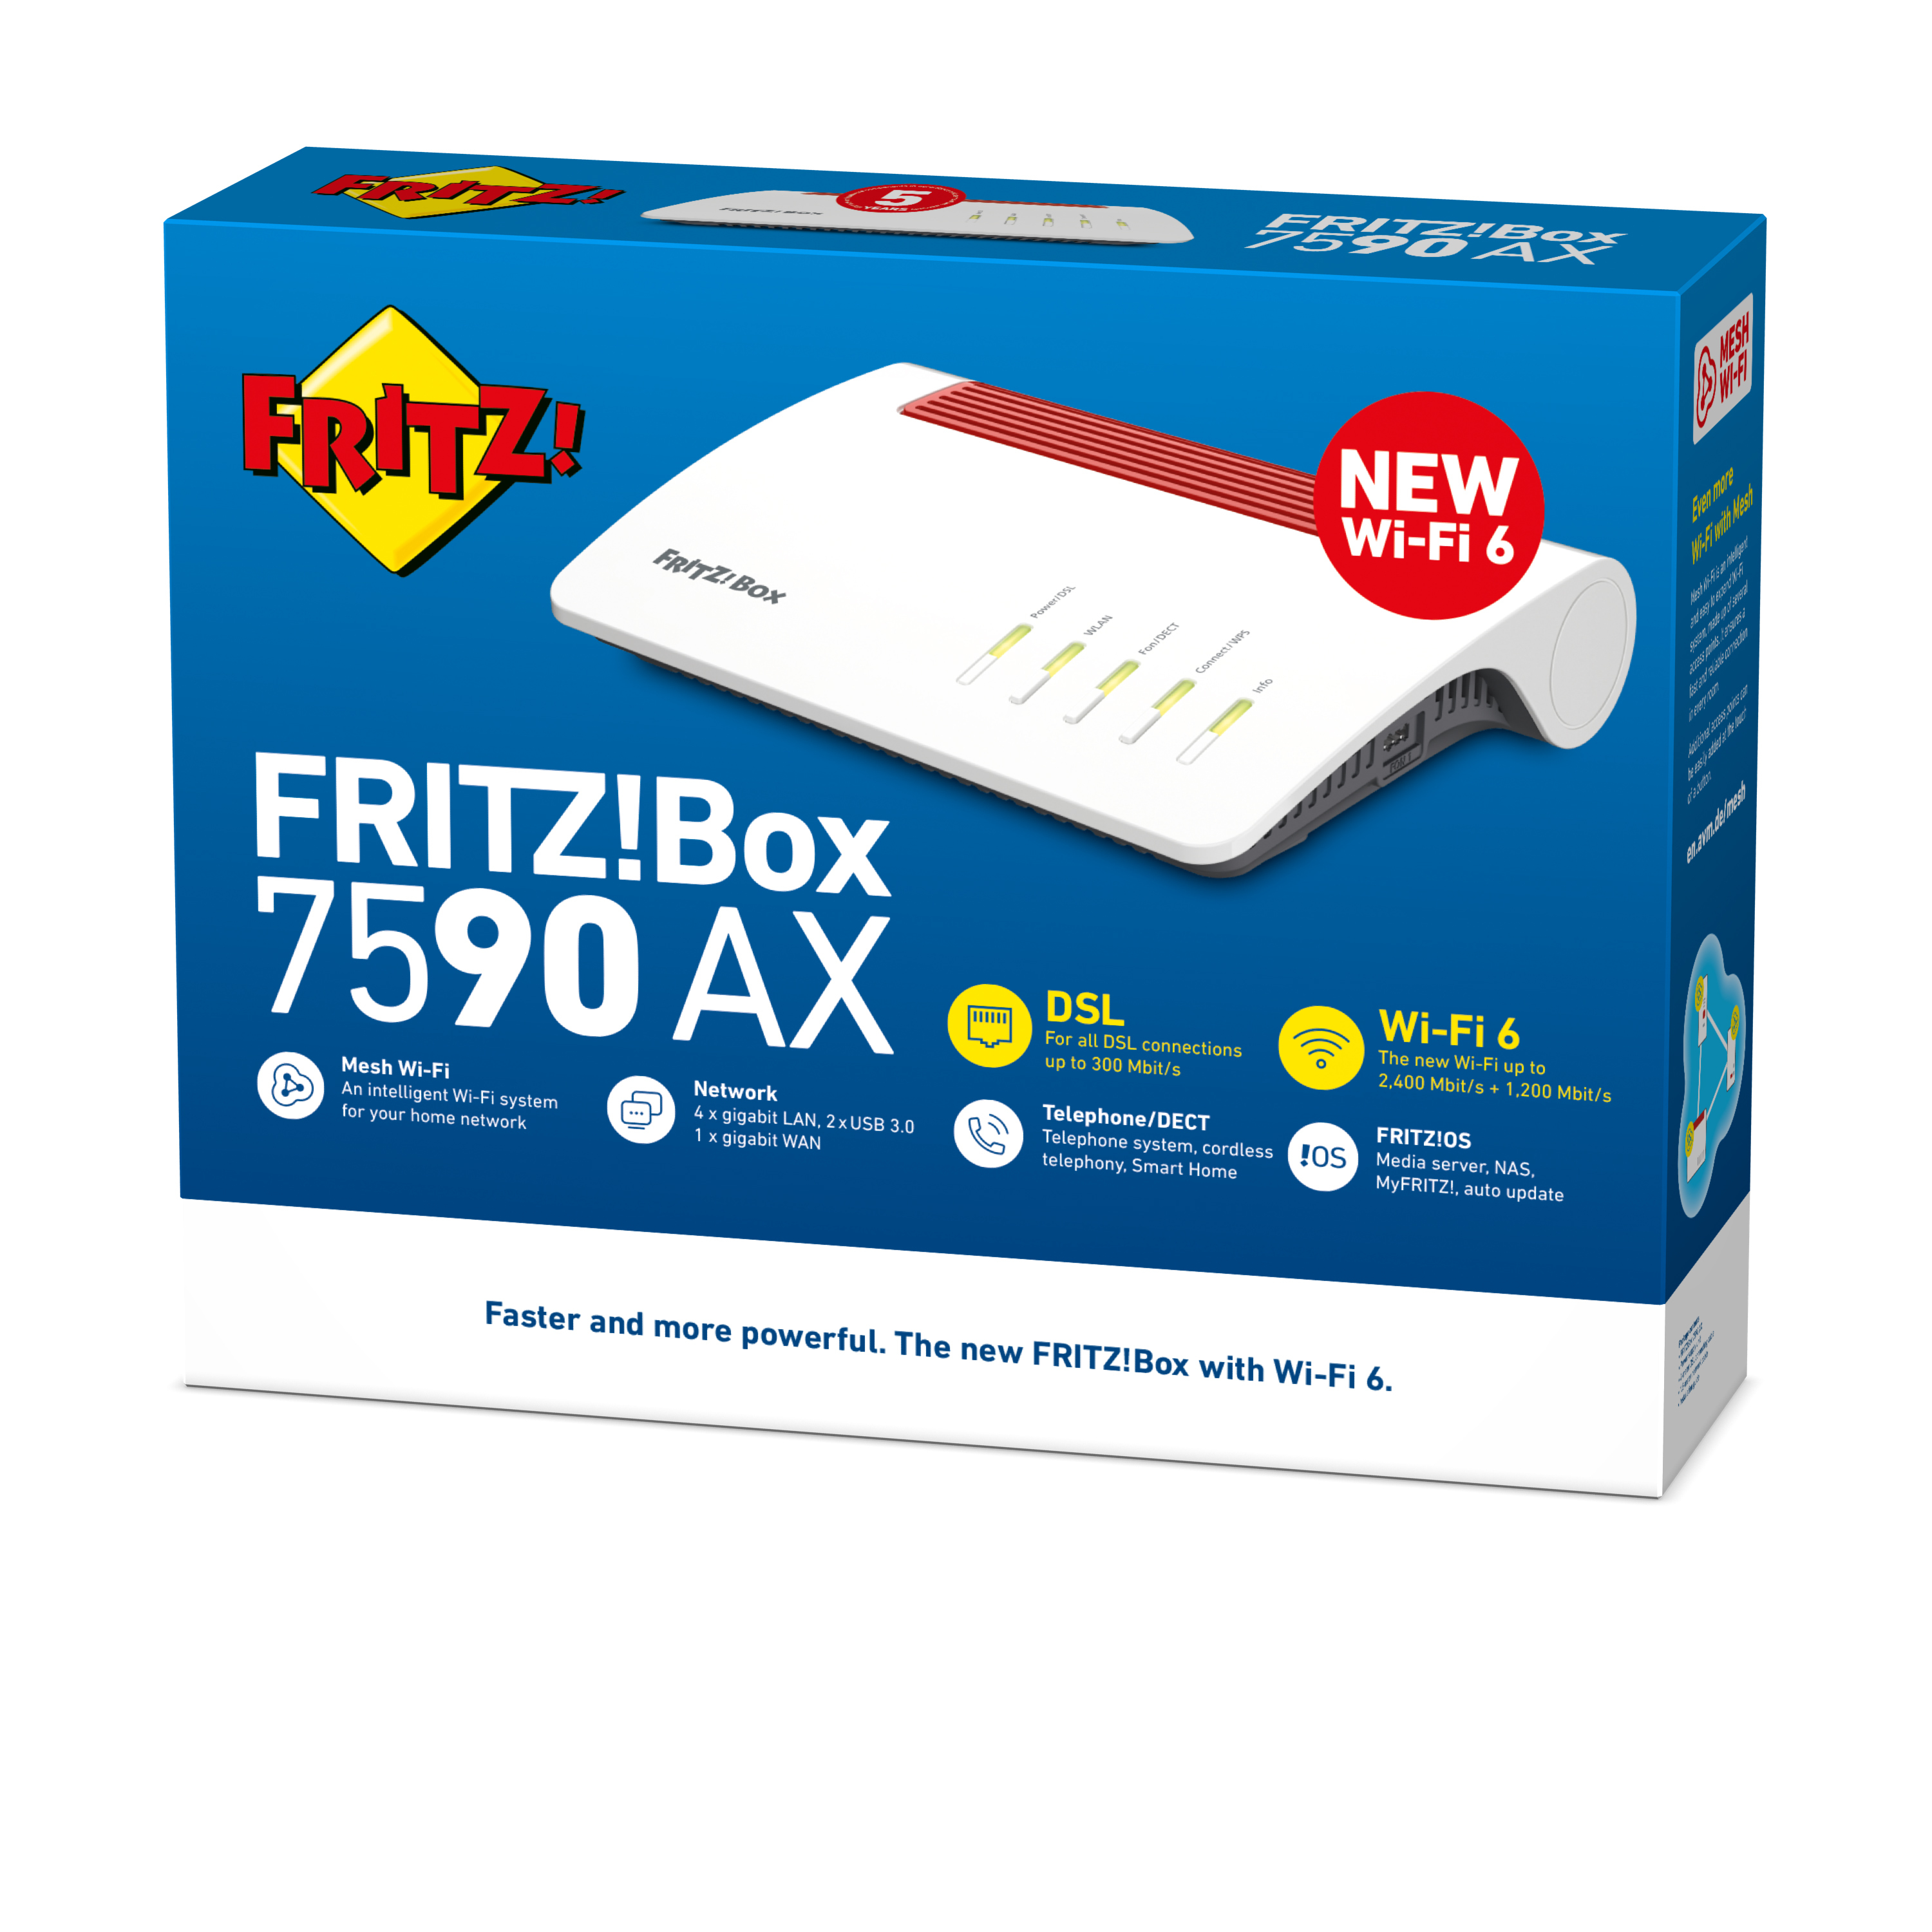 FRITZ!Box 7590 AX EDITION INTERNATIONAL